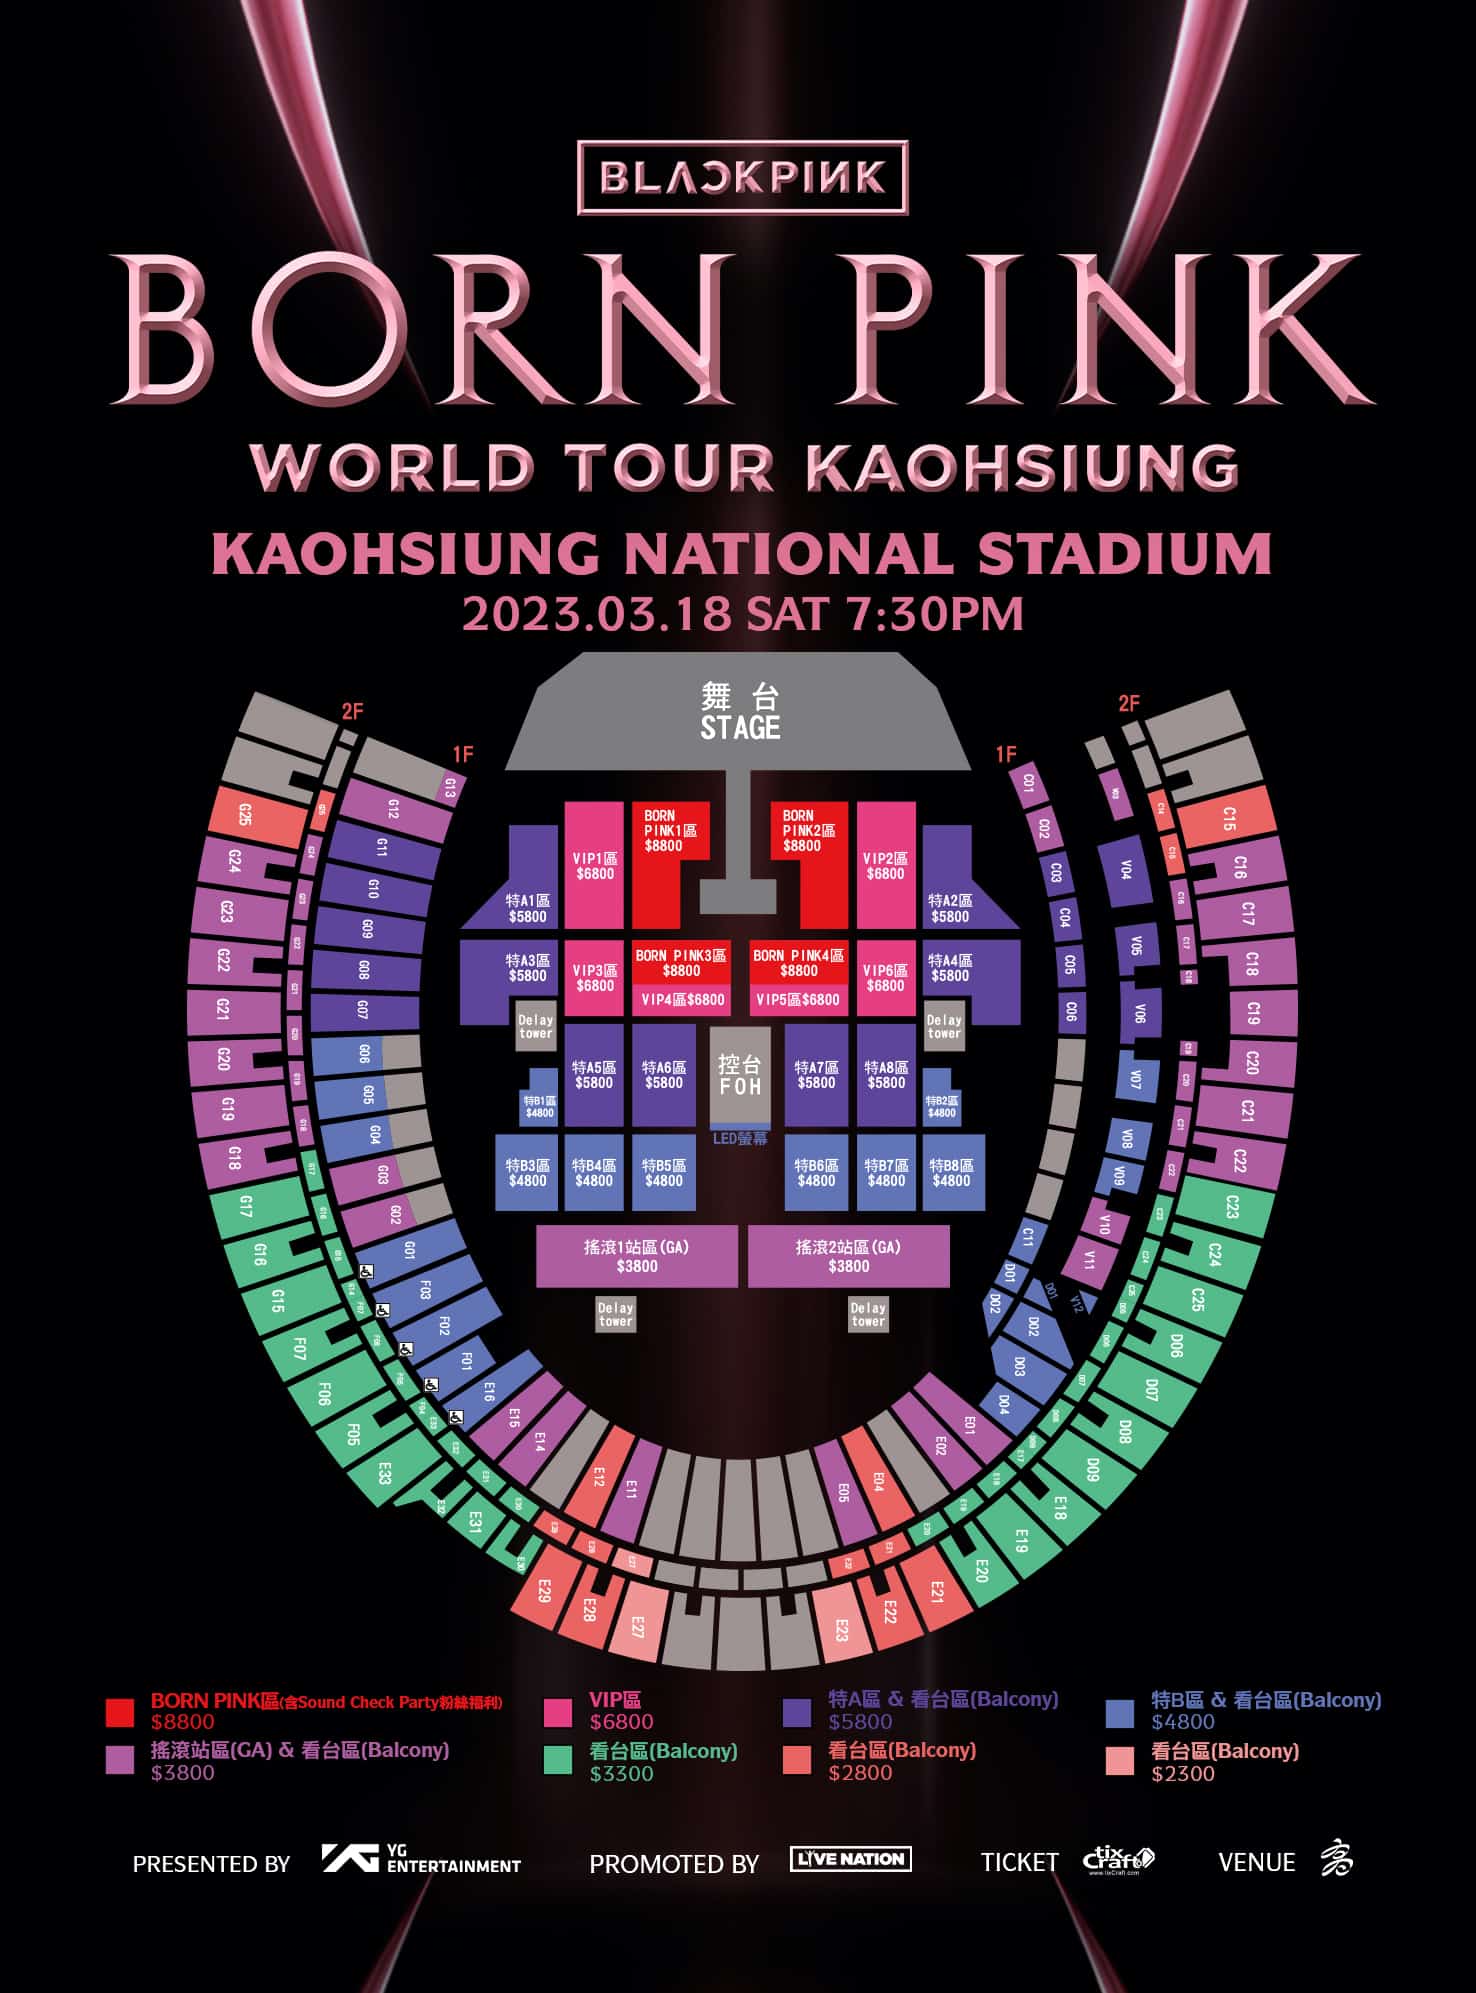 BLACKPINK WORLD TOUR [BORN PINK] KAOHSIUNG 座位圖與票價